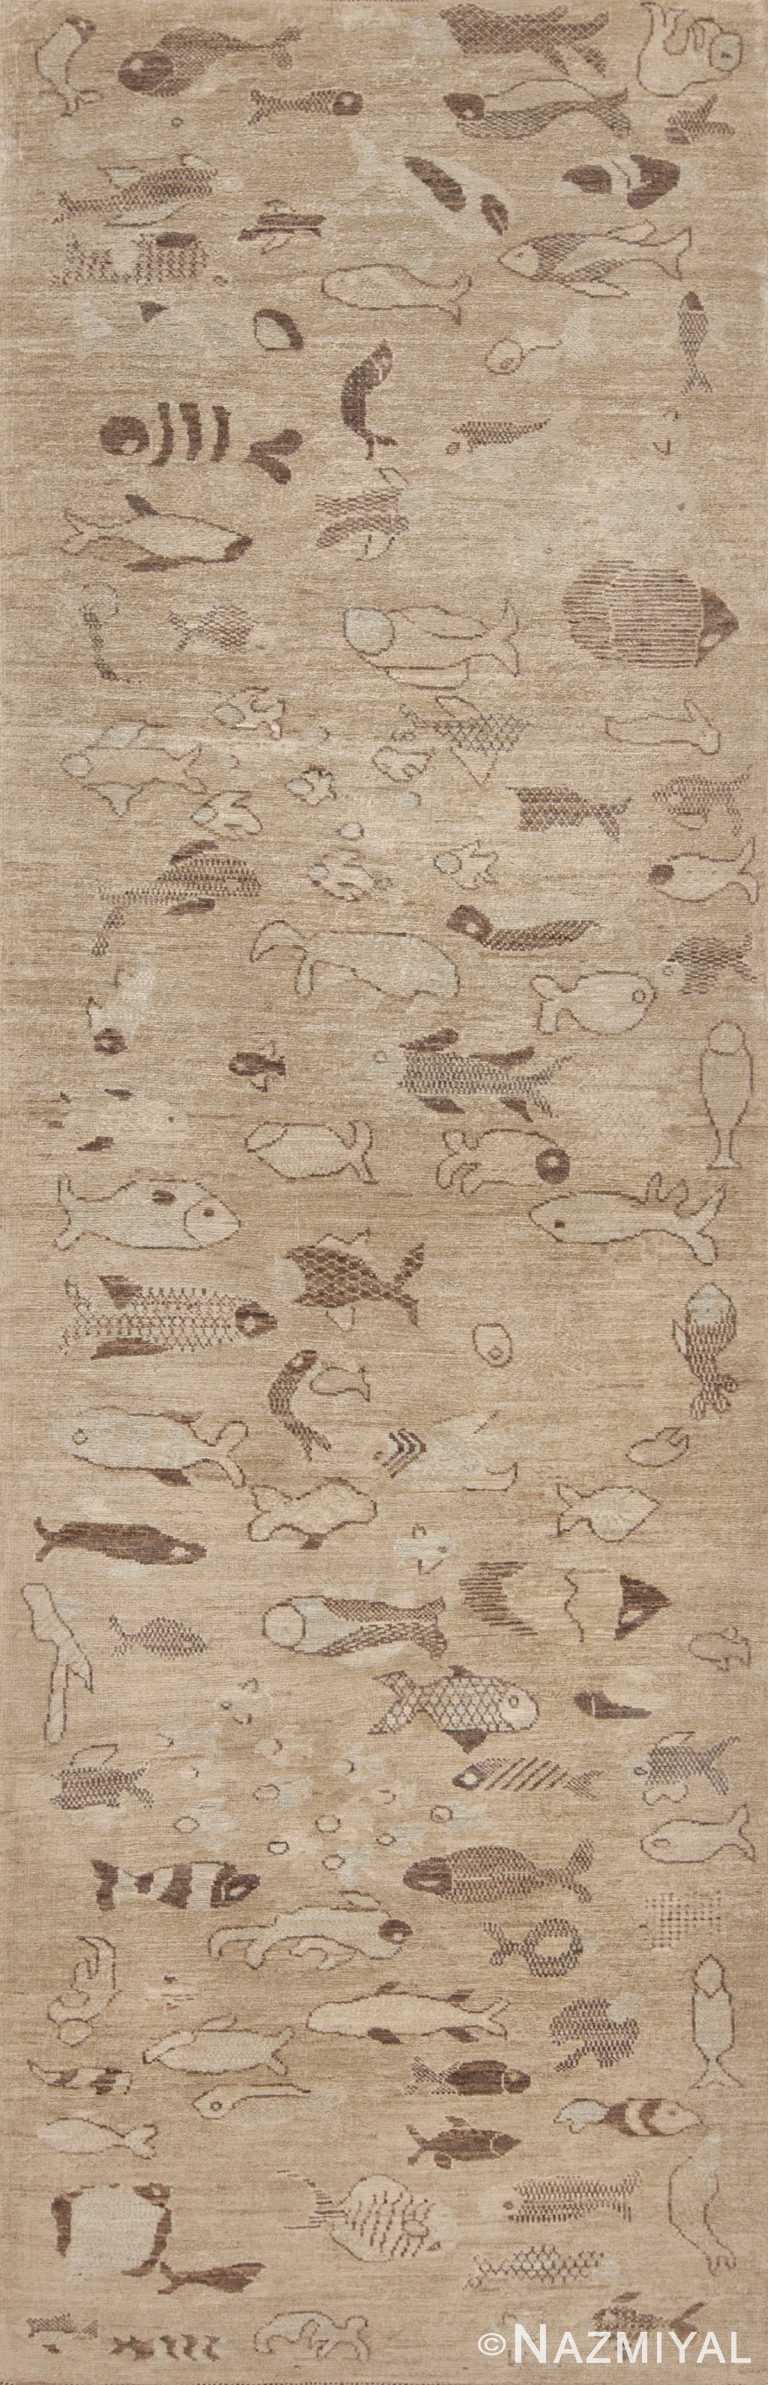 Neutral Color Artistic Fish Design Modern Hallway Runner Rug 11004 by Nazmiyal Antique rugs